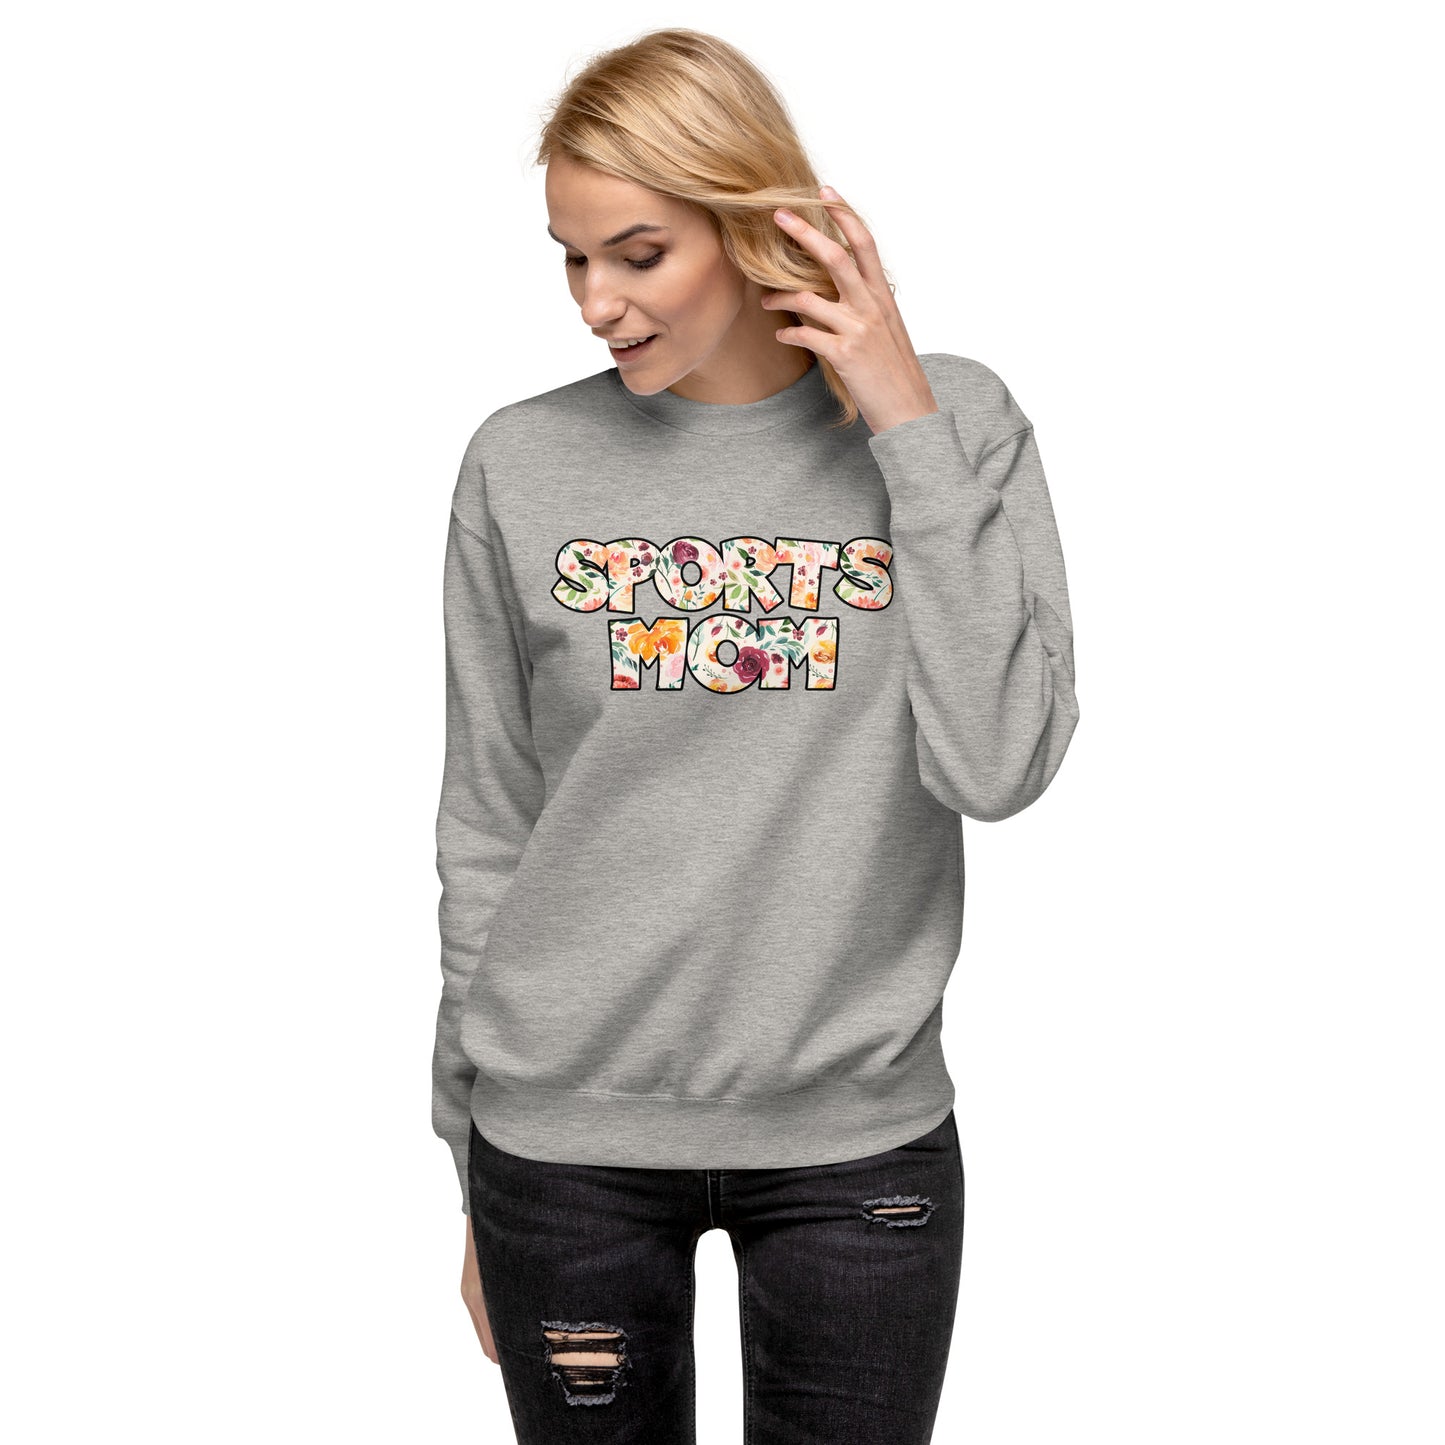 "Sports Mom" Sweater